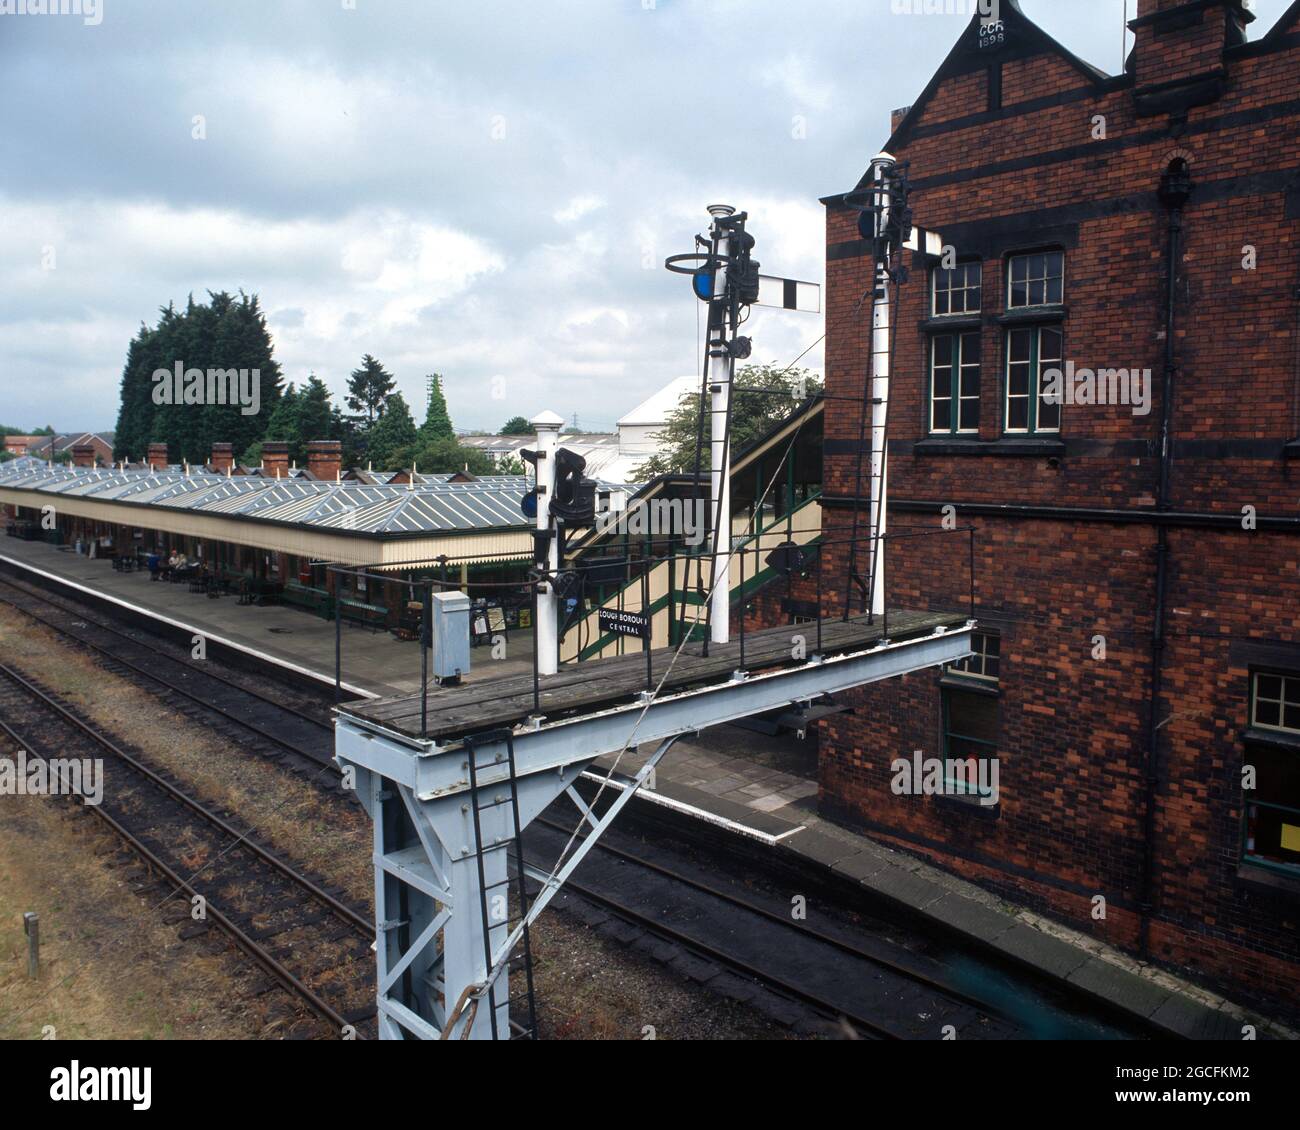 Loughborough, UK - 3 July 2021: Old semaphore signals on Loughborough Central station. Stock Photo